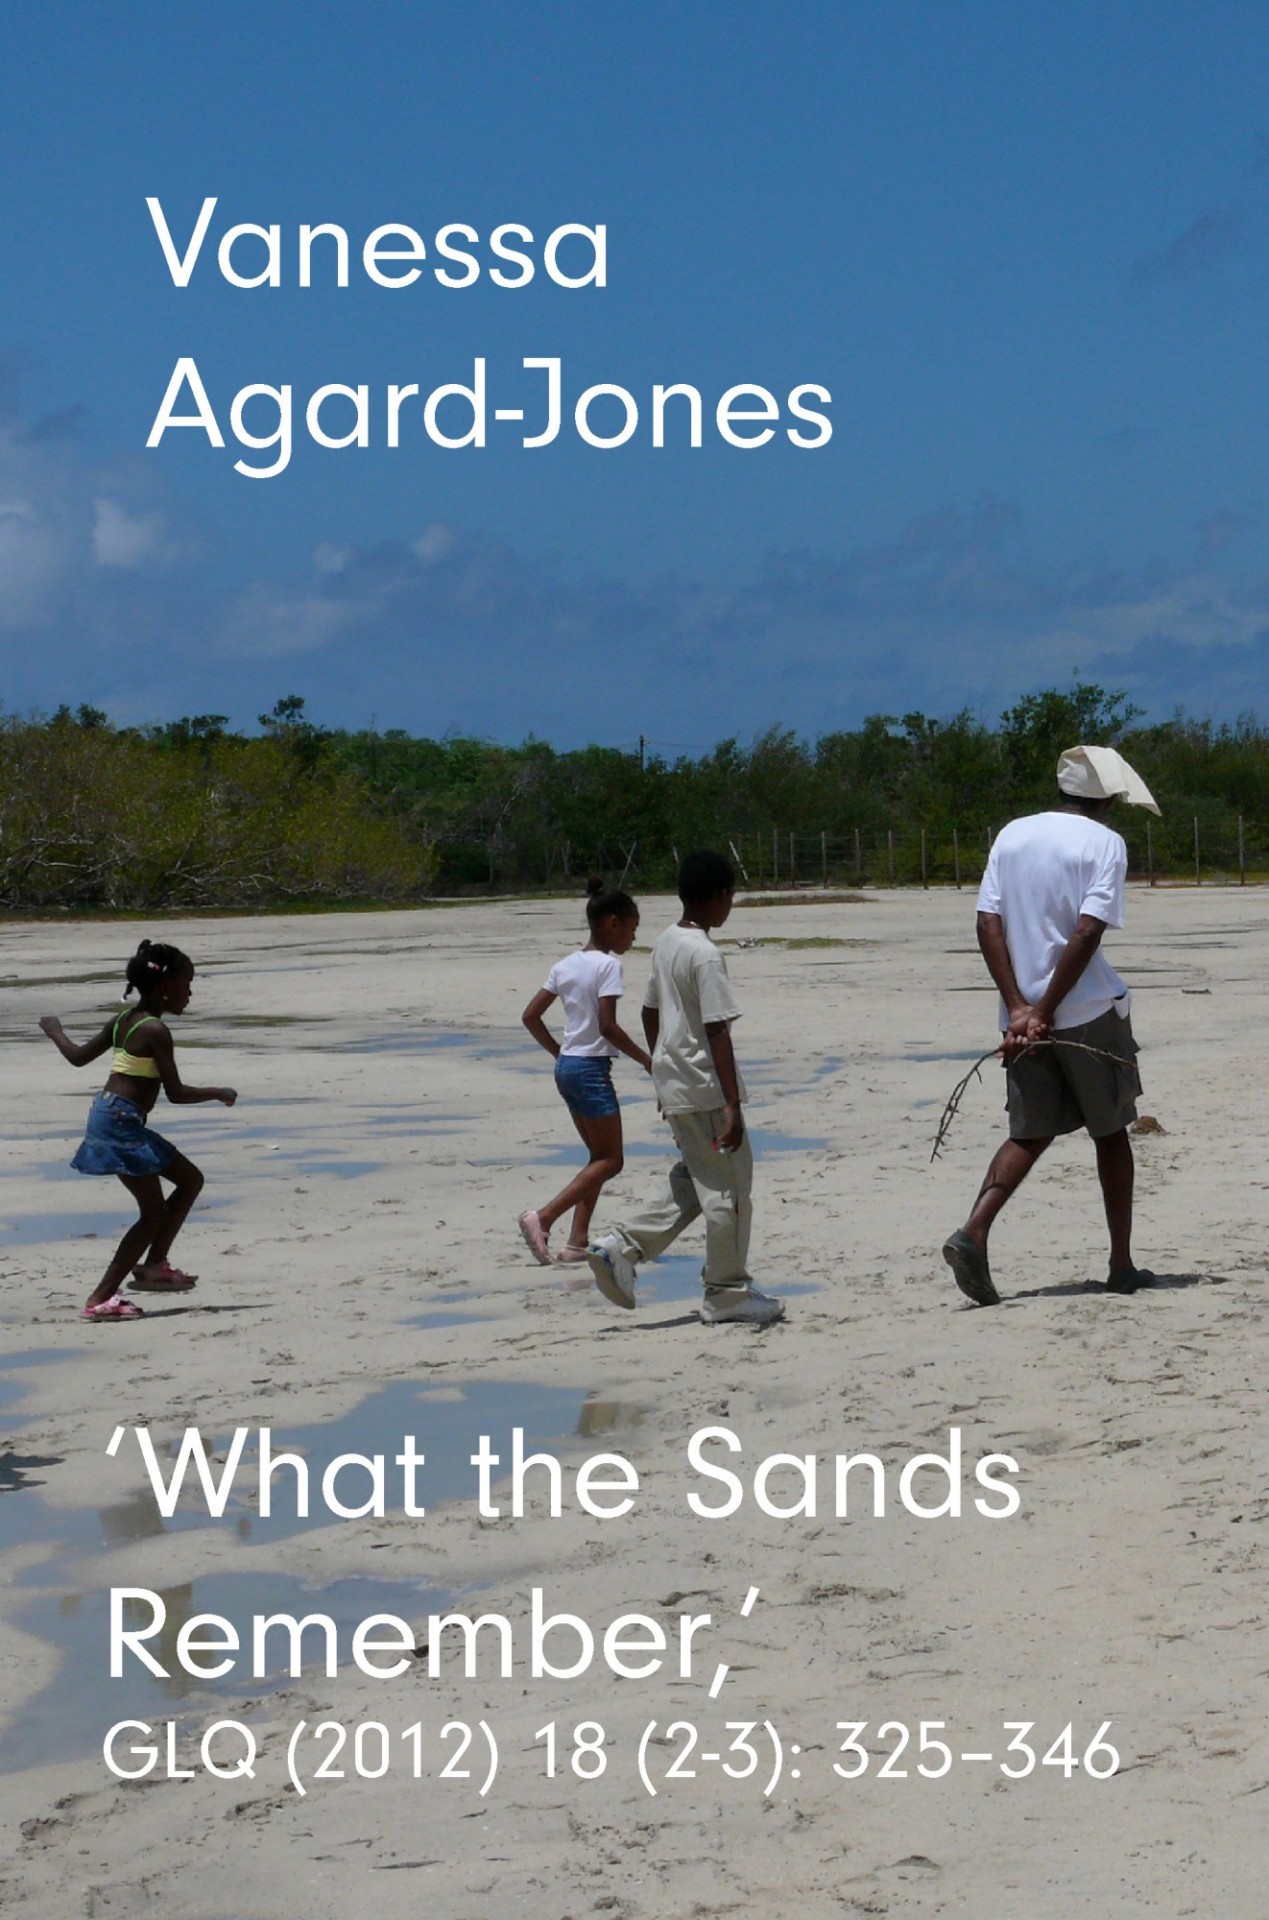 Vanessa Agard-Jones, 'What the Sands Remember'